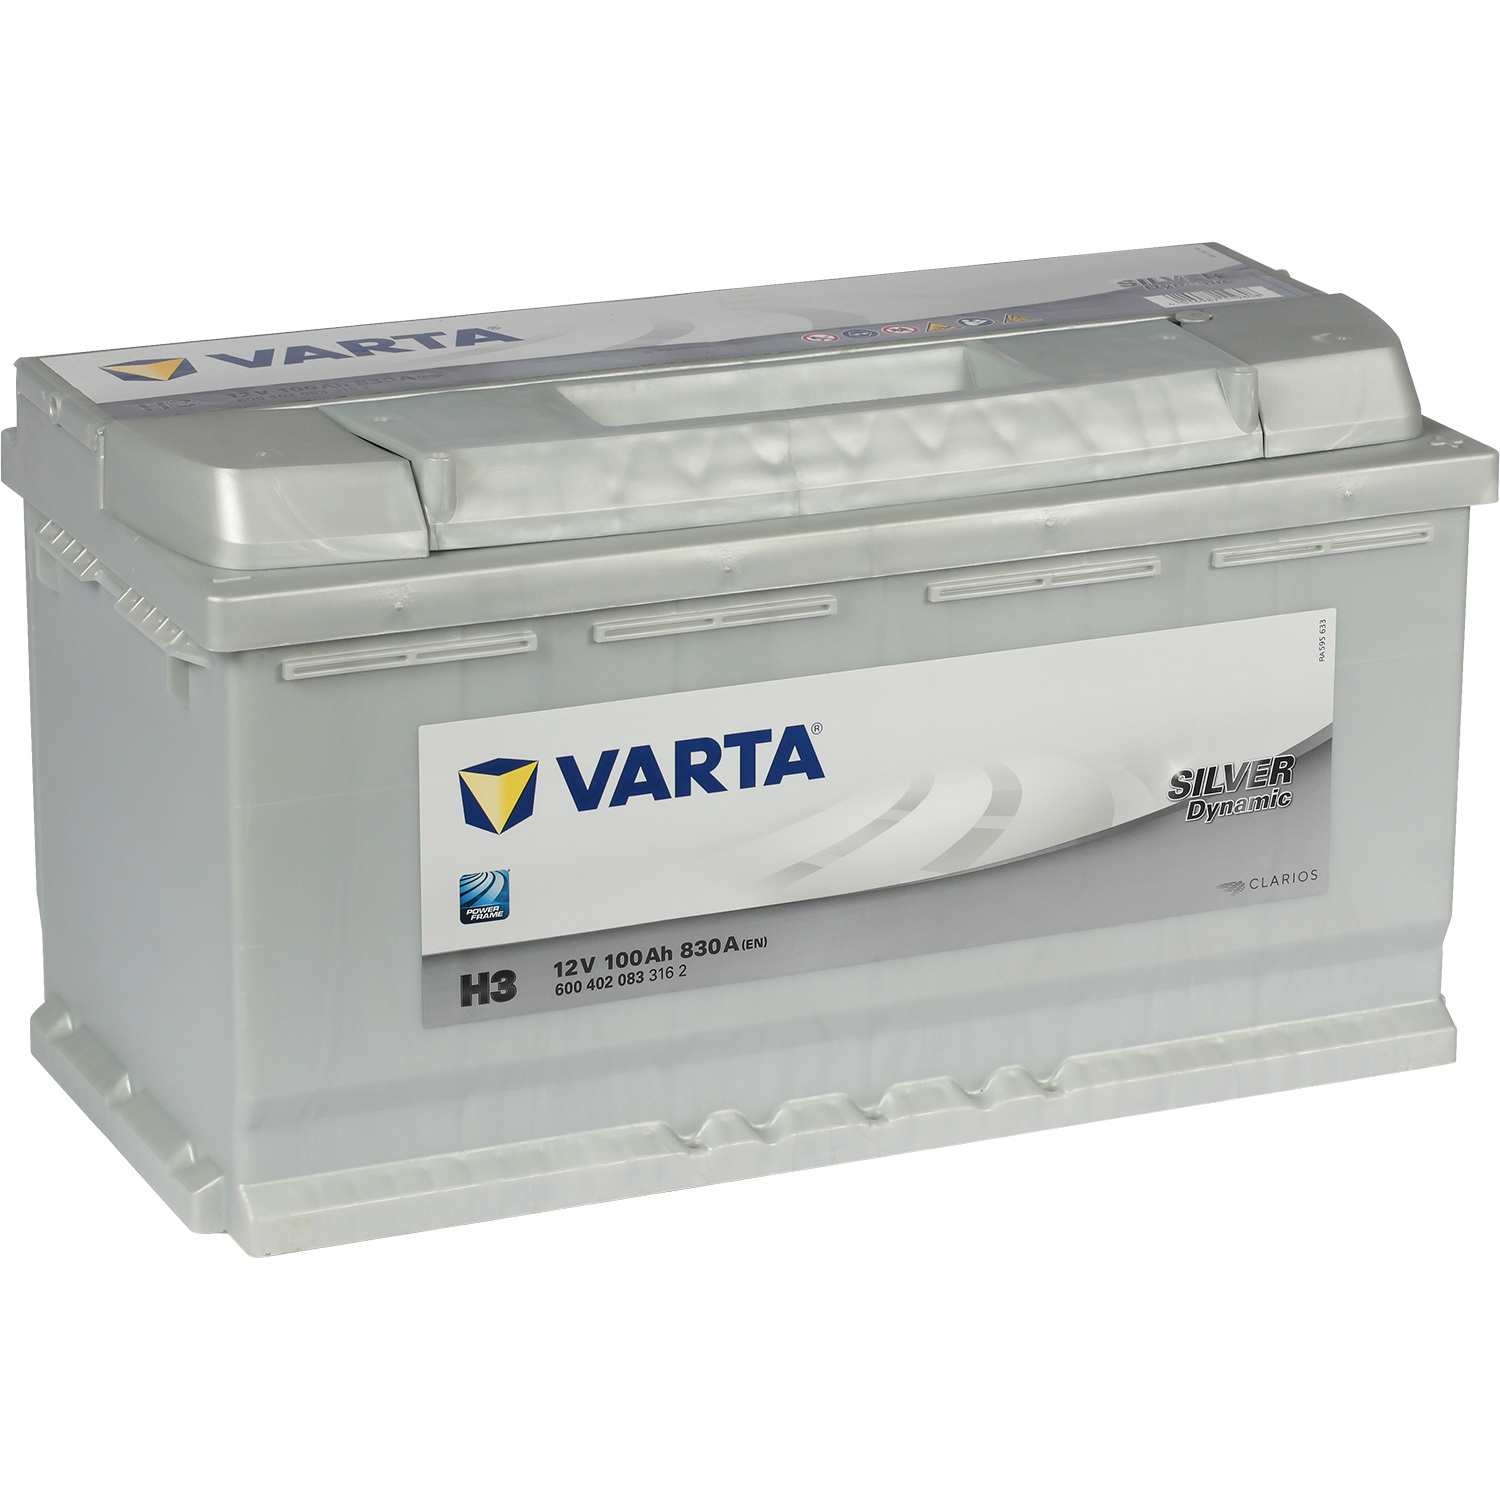 Varta Автомобильный аккумулятор Varta Silver Dynamic H3 100 Ач обратная полярность L5 varta автомобильный аккумулятор varta 54 ач обратная полярность l1